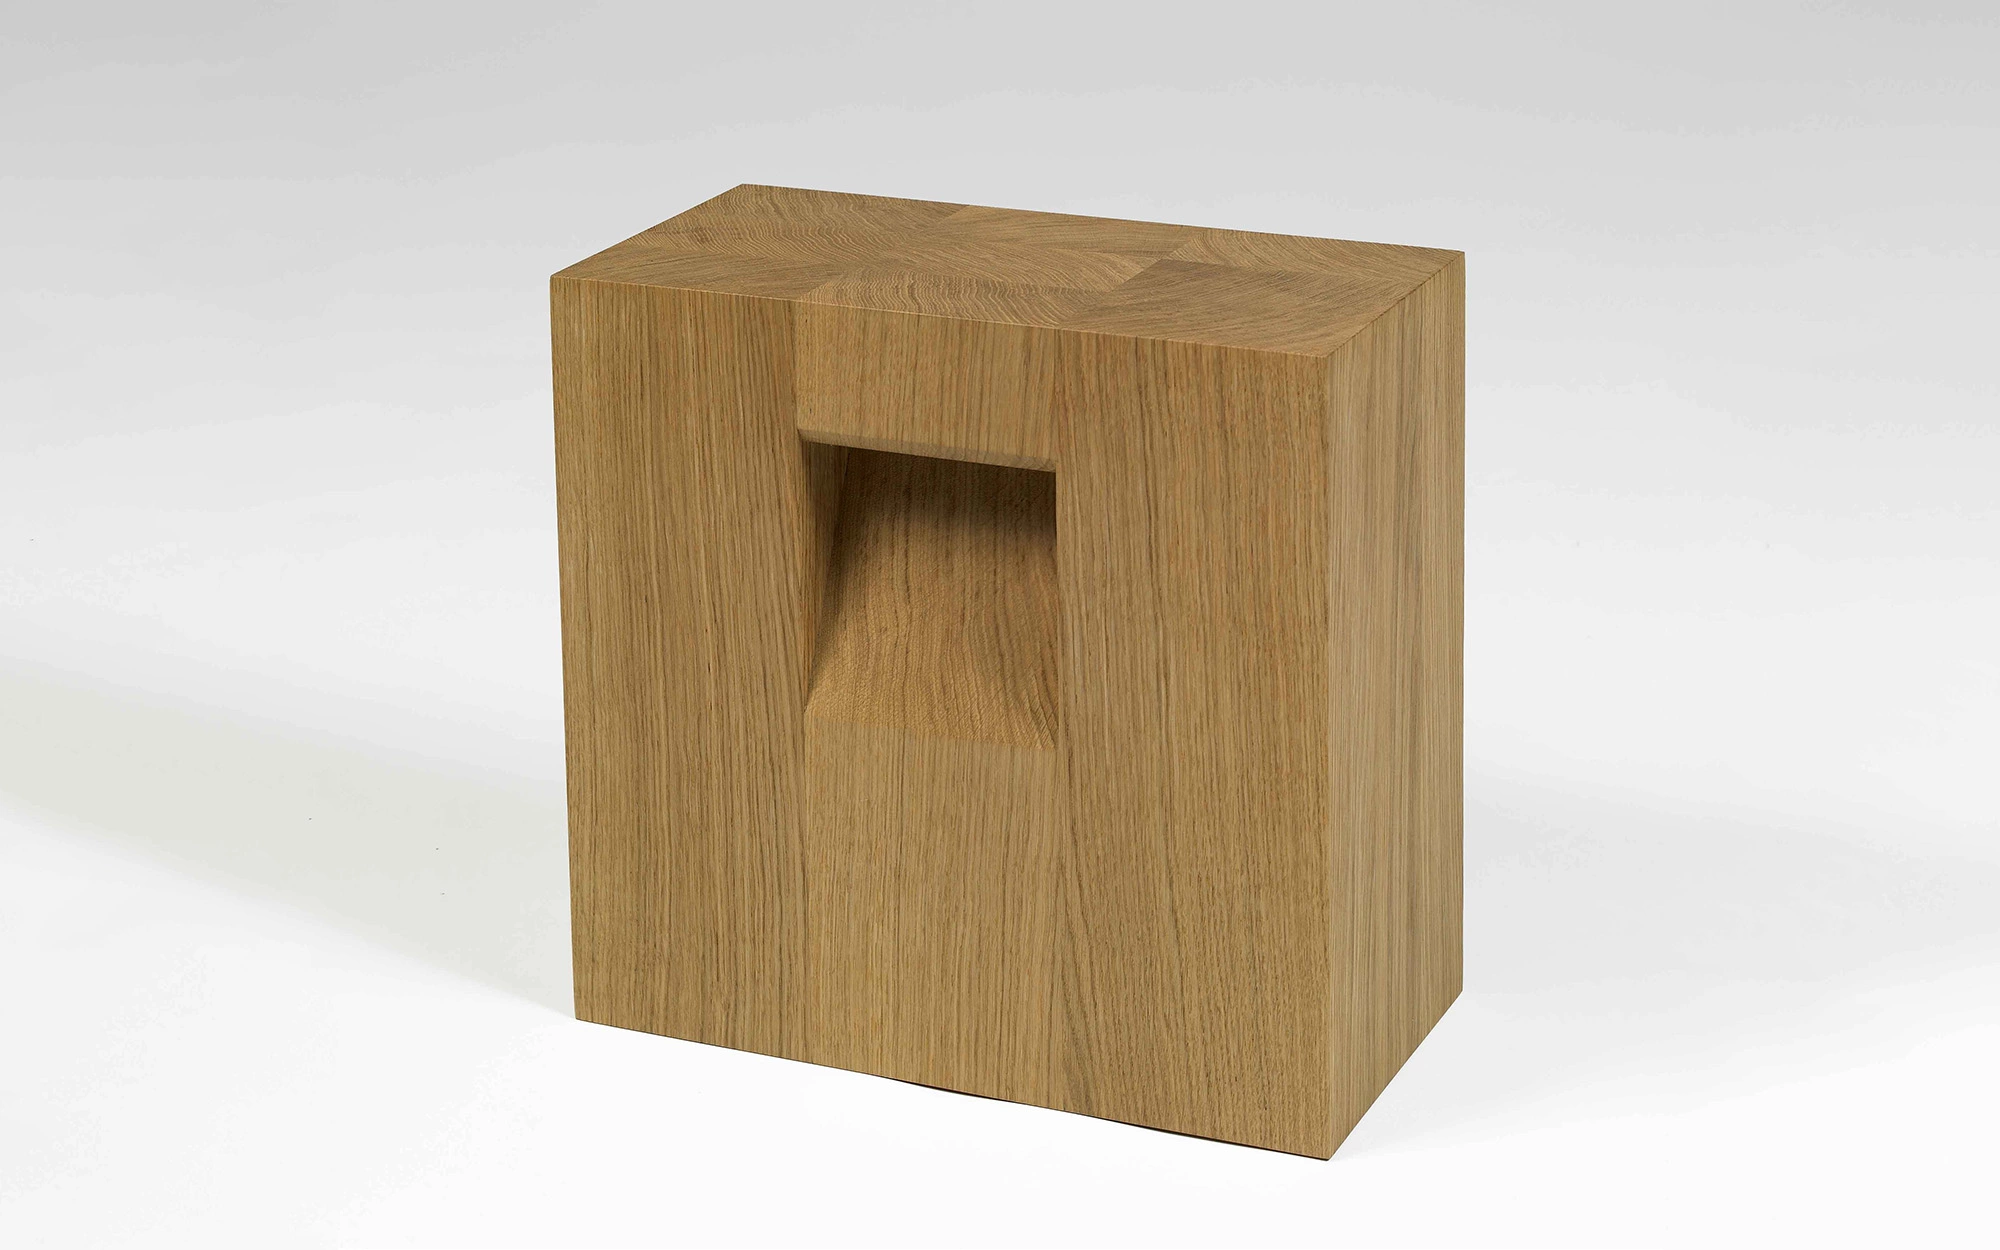 L'objet manquant - Konstantin Grcic - seating - Galerie kreo